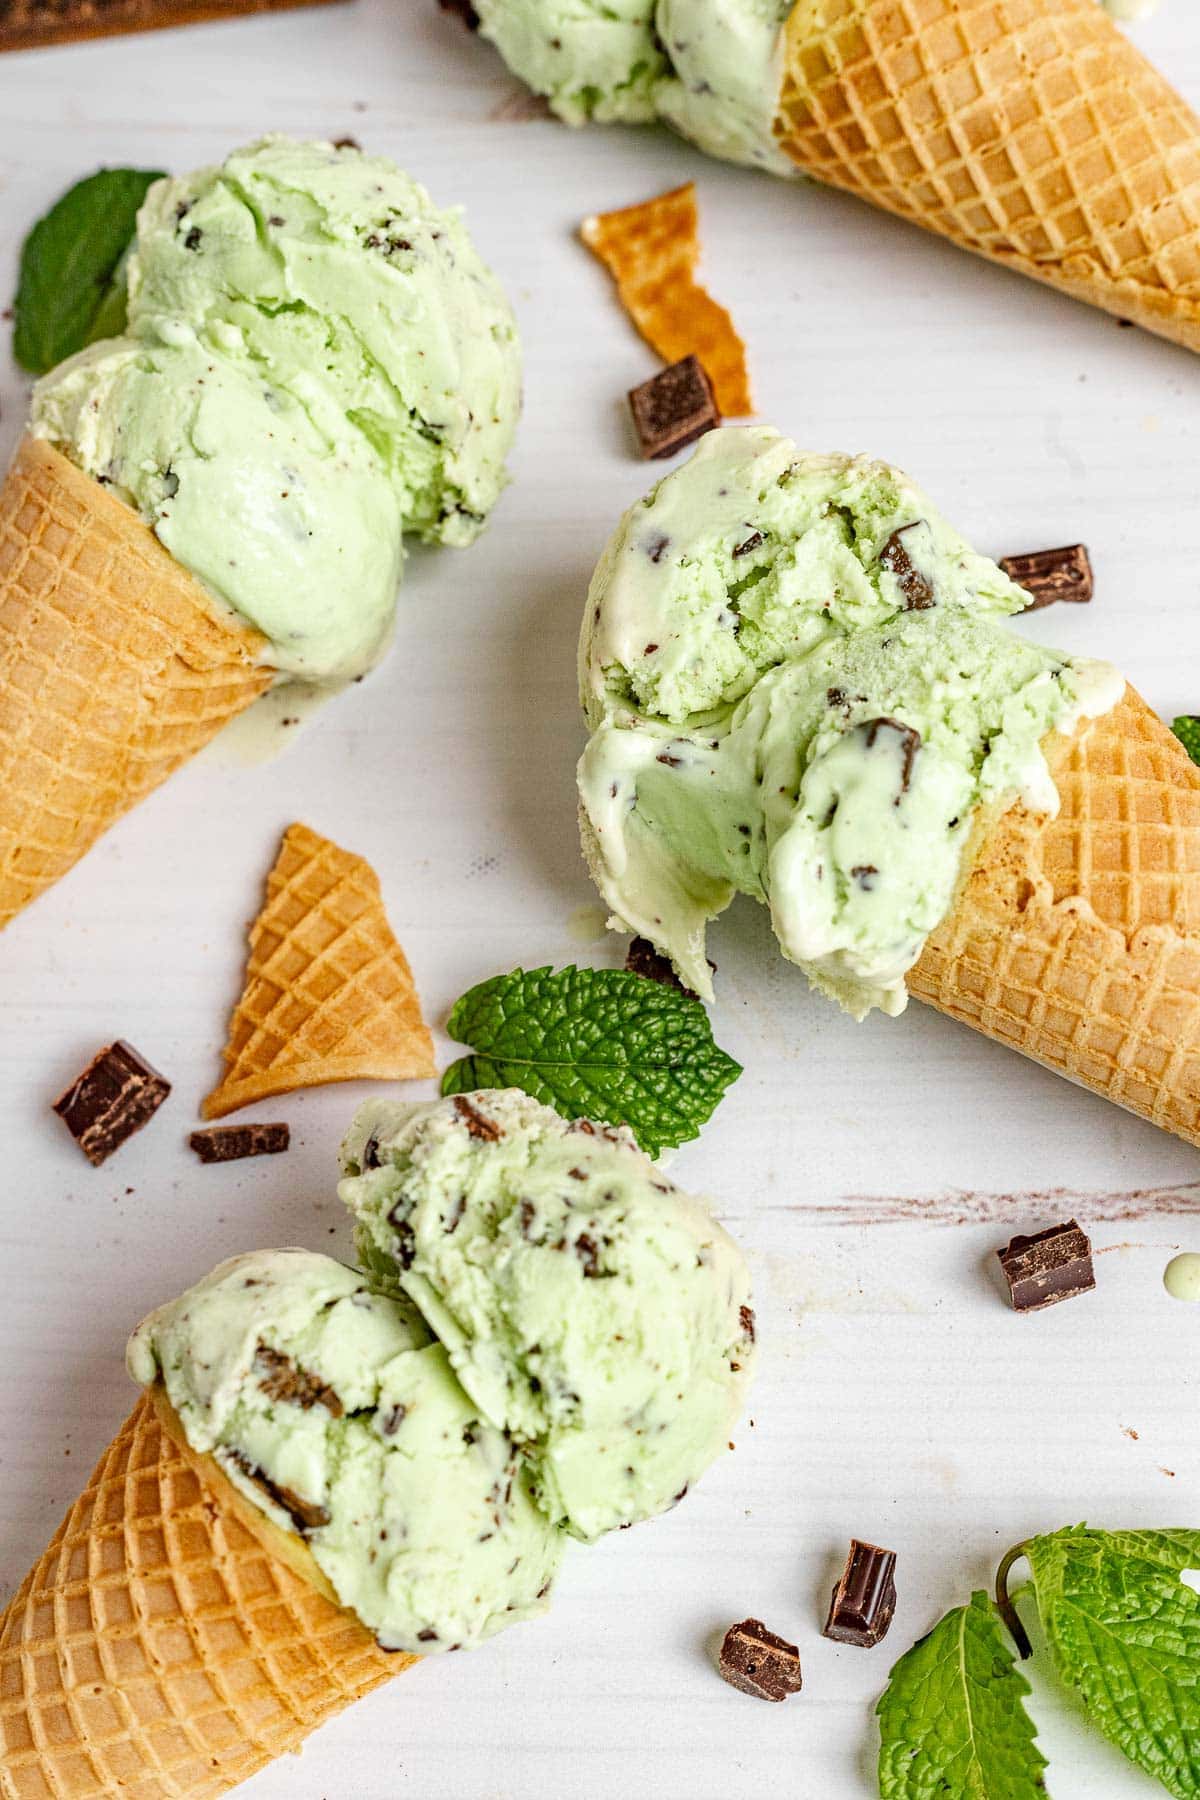 Homemade Mint Chocolate Chip Ice Cream Recipe